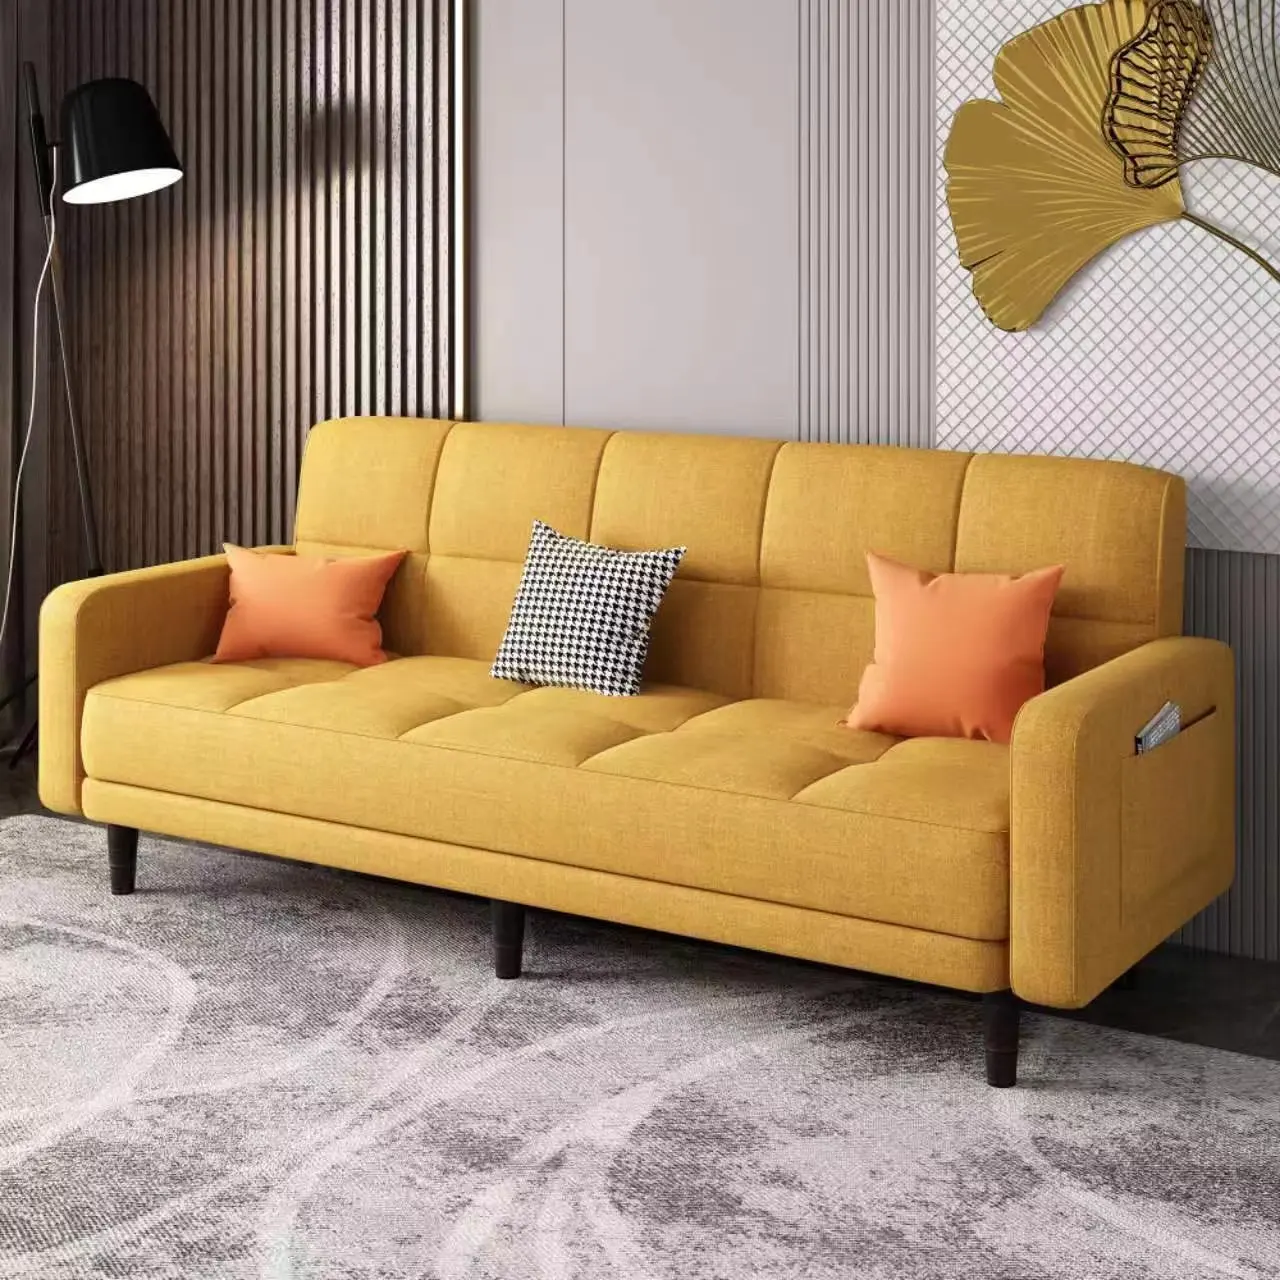 Lounge Fancy Sectional Living Room Sets Sofá asiento Tela Moderno Bajo Precio Sofá largo Muebles para el hogar